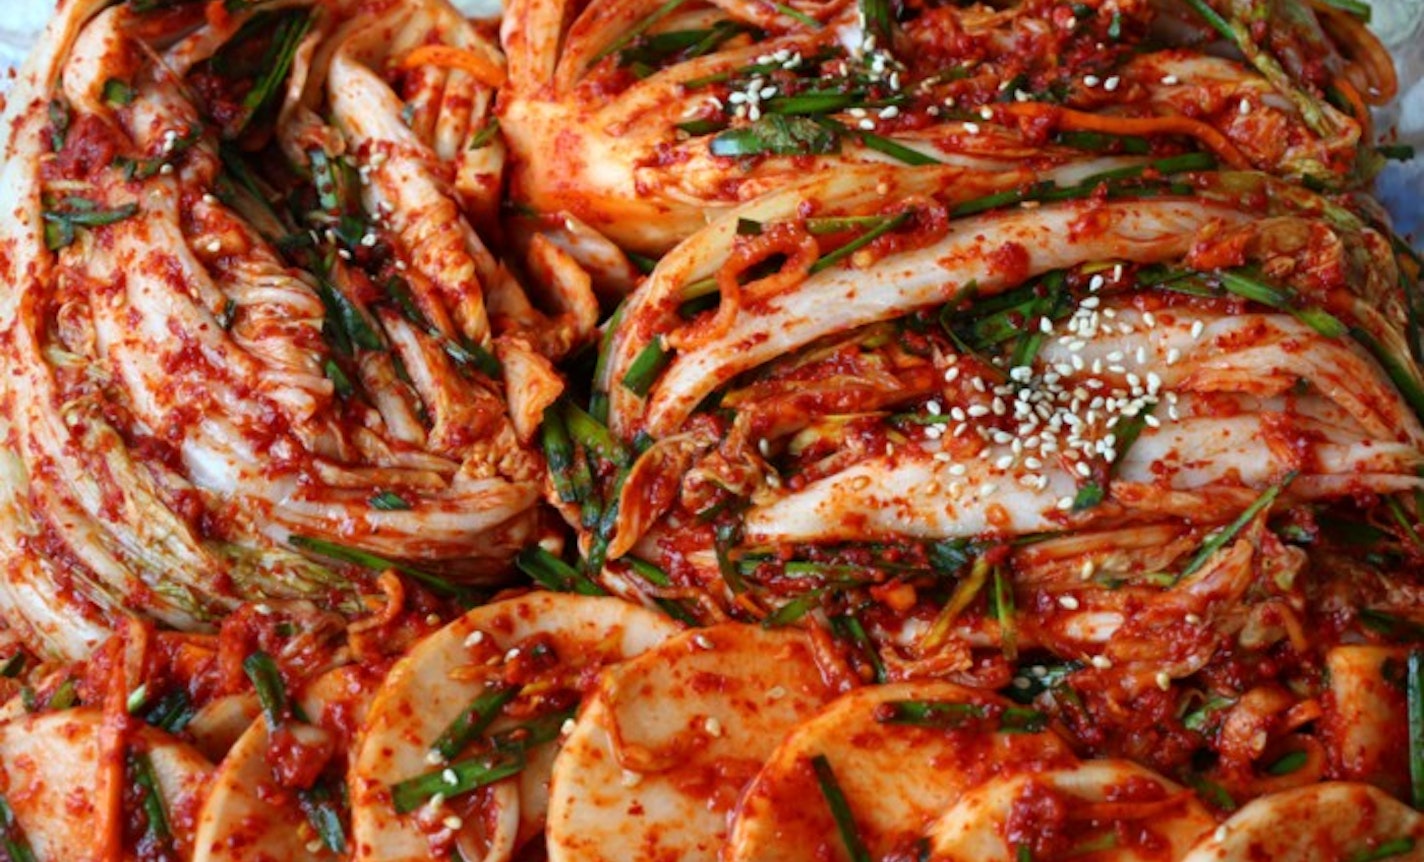 Preserve and Nourish: Kimchi Making and Storytelling